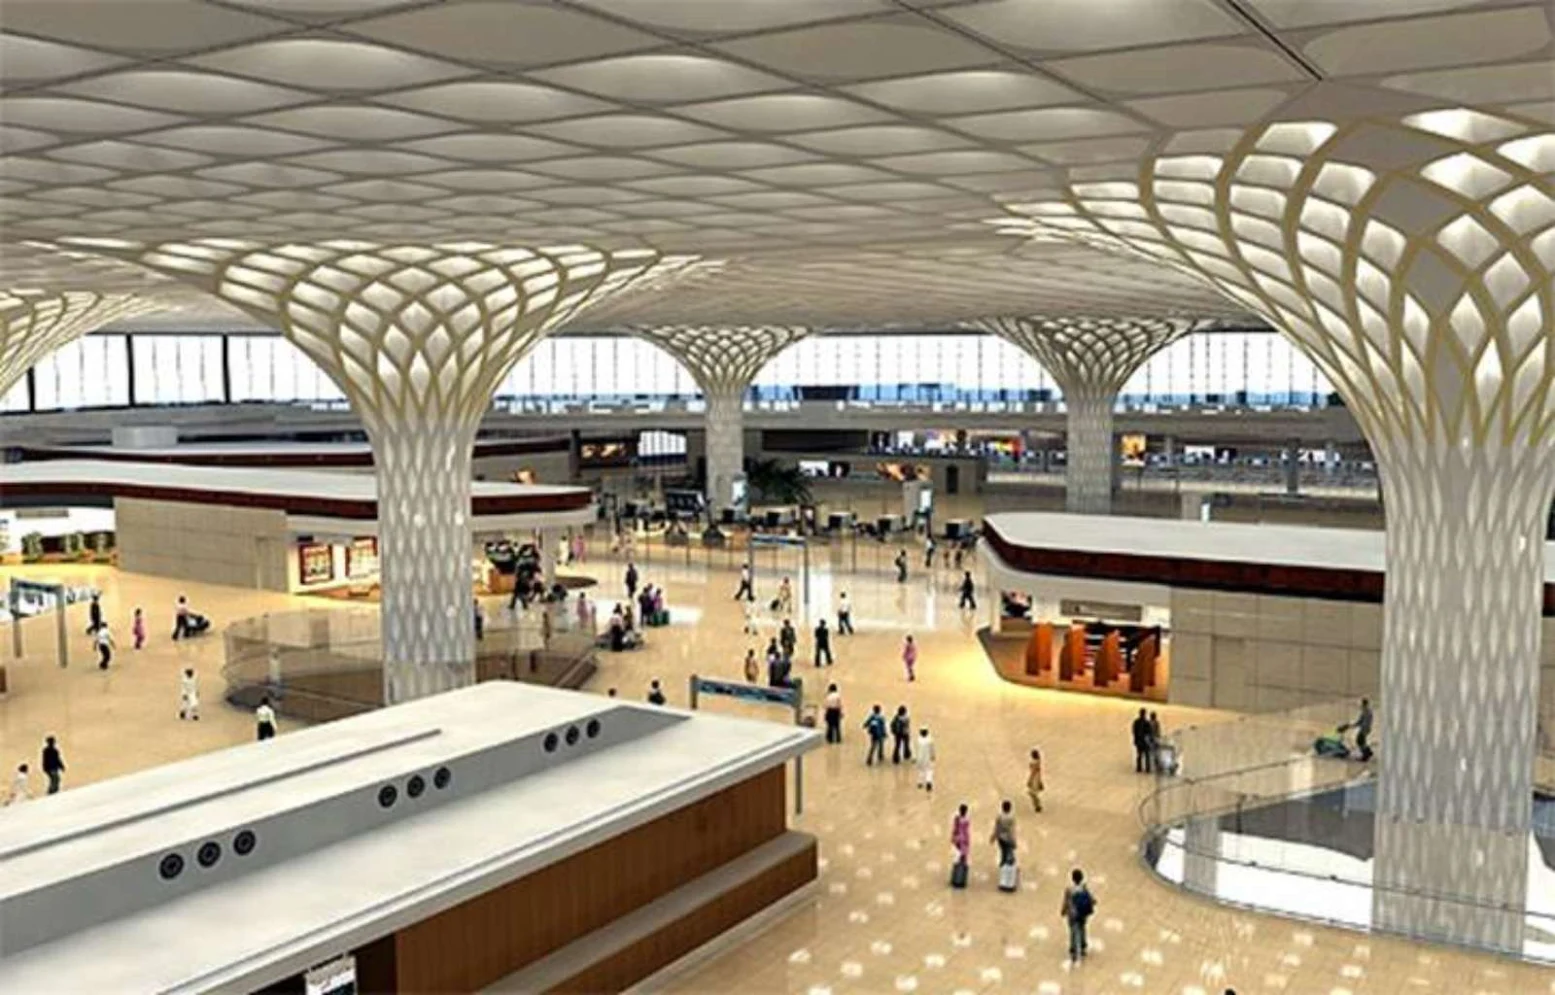 Open the Chhatrapati Shivaji International Airport by SOM